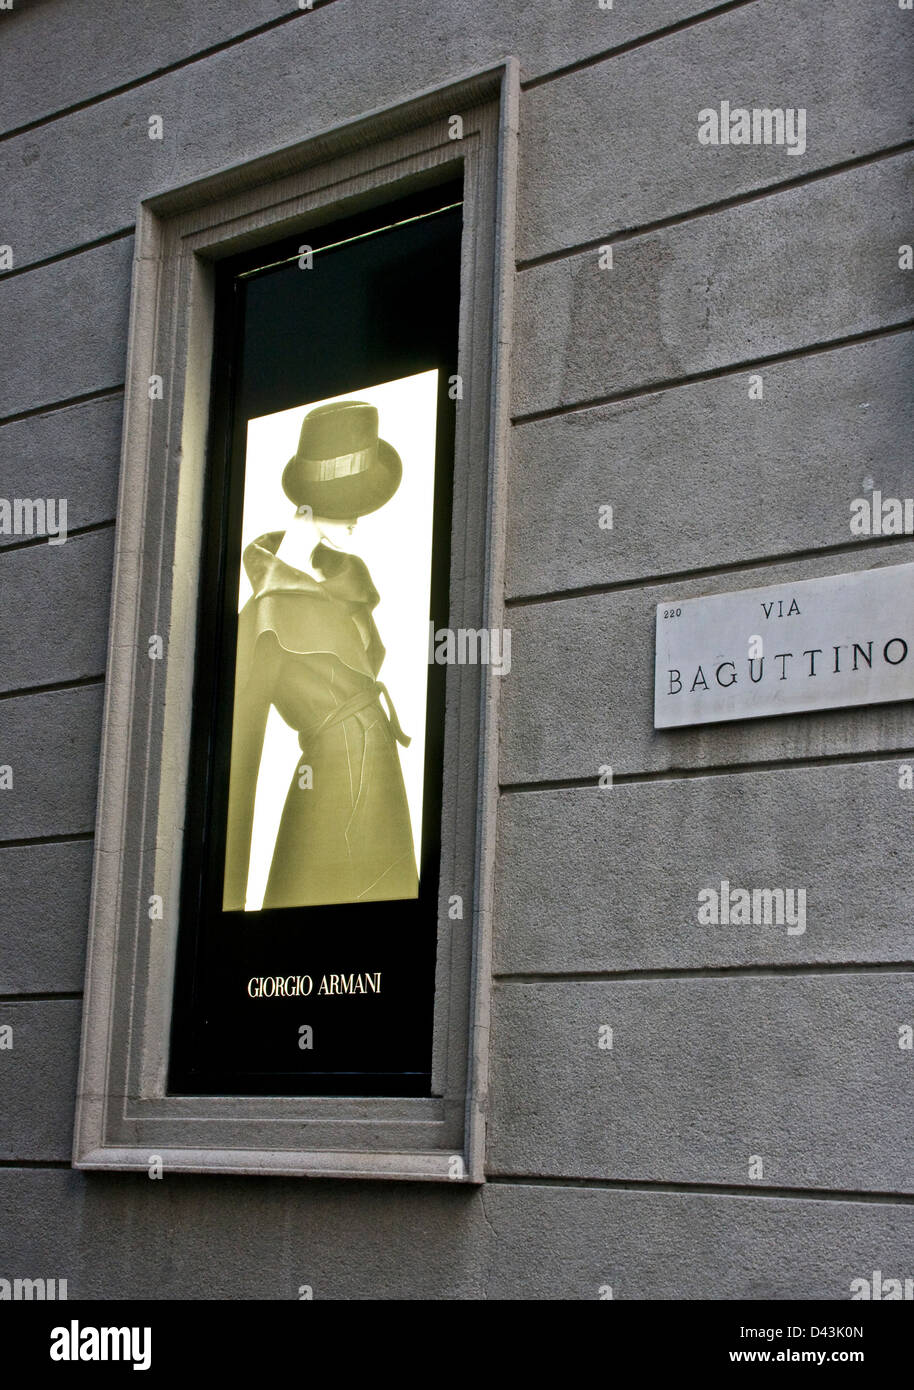 Giorgio Armani Illuminated womens fashion advert Via Baguttino Milan Lombardy Italy Europe Stock Photo